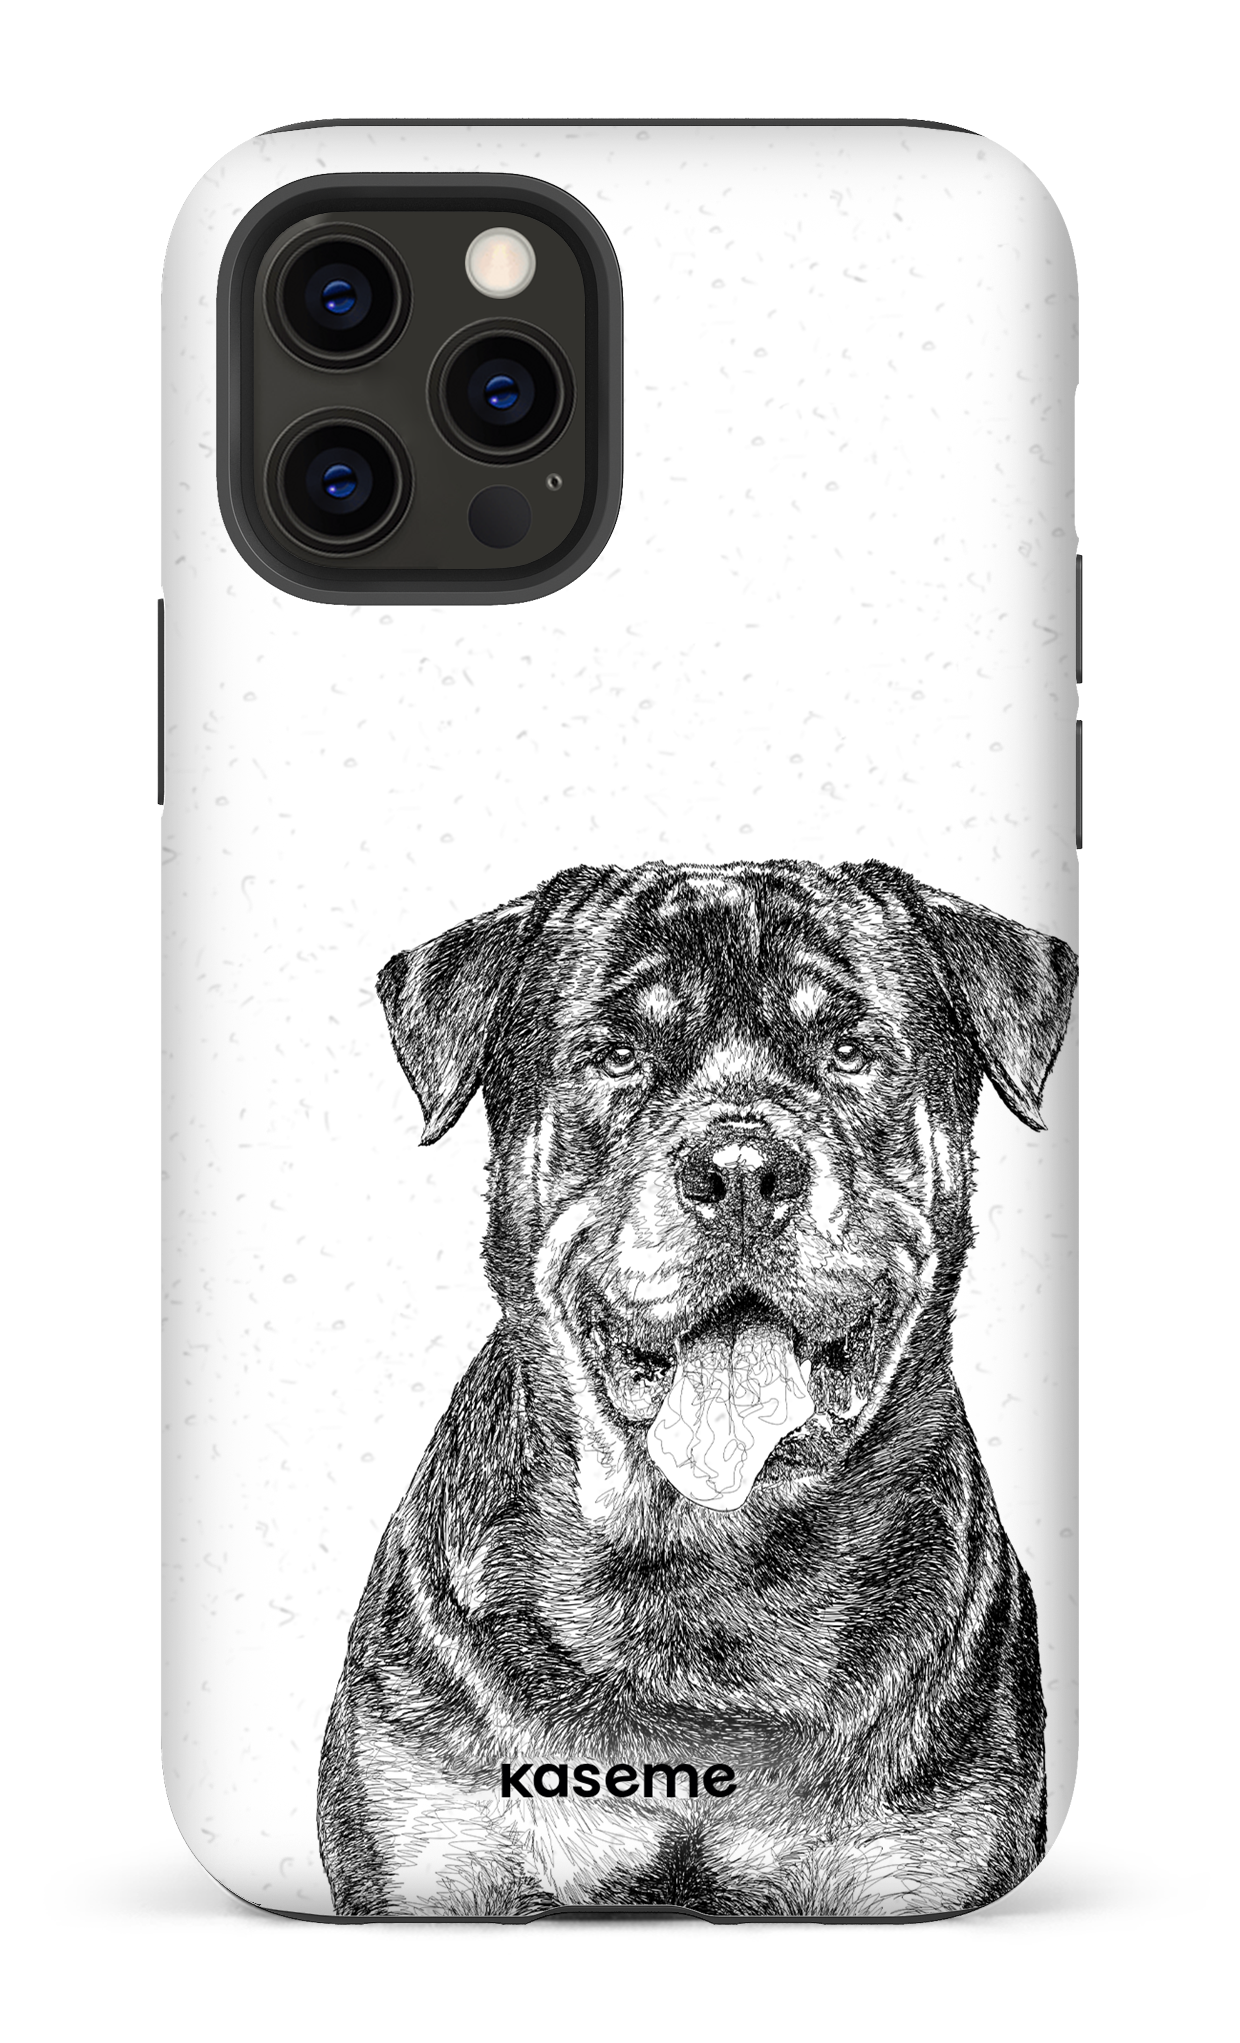 Rottweiler - iPhone 12 Pro